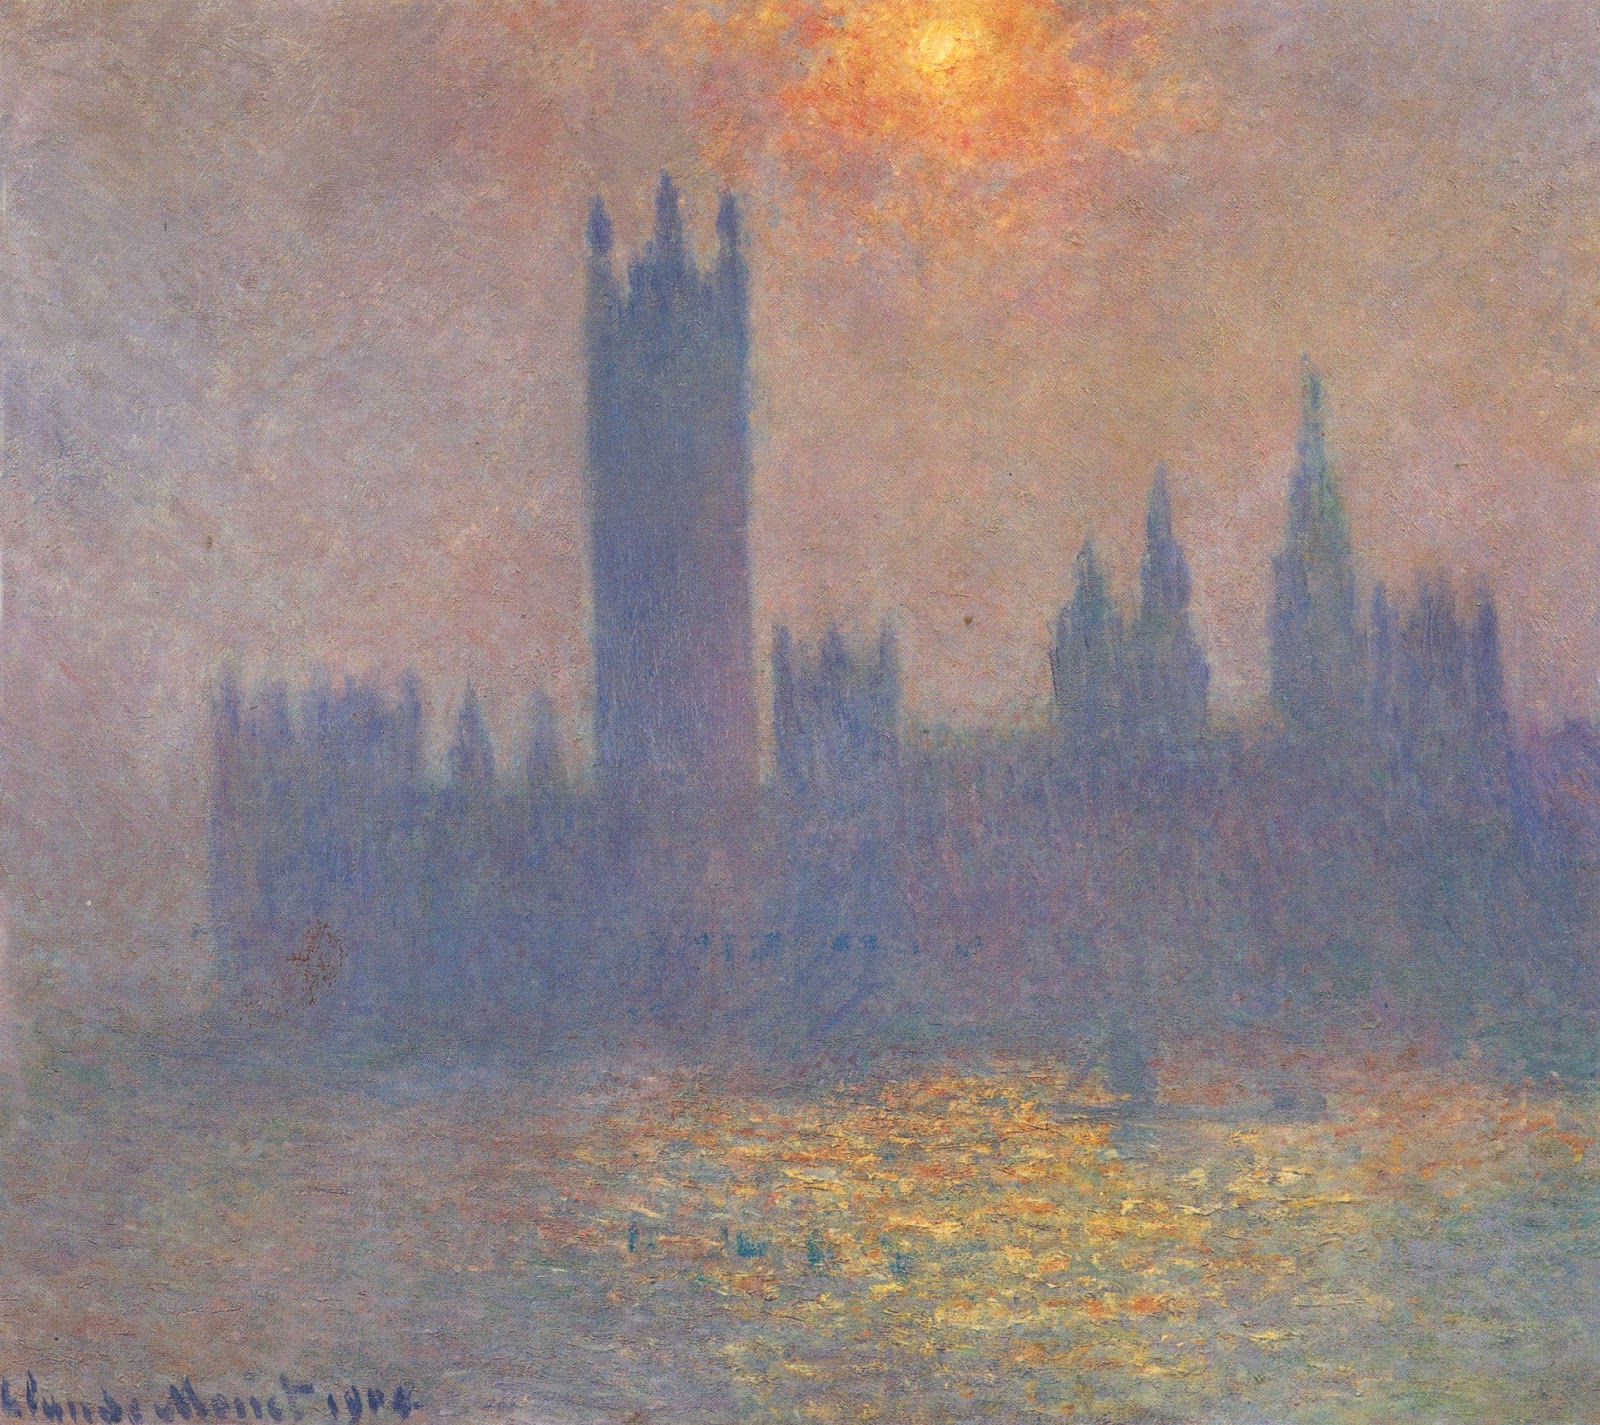 Claude+Monet-1840-1926 (303).jpg